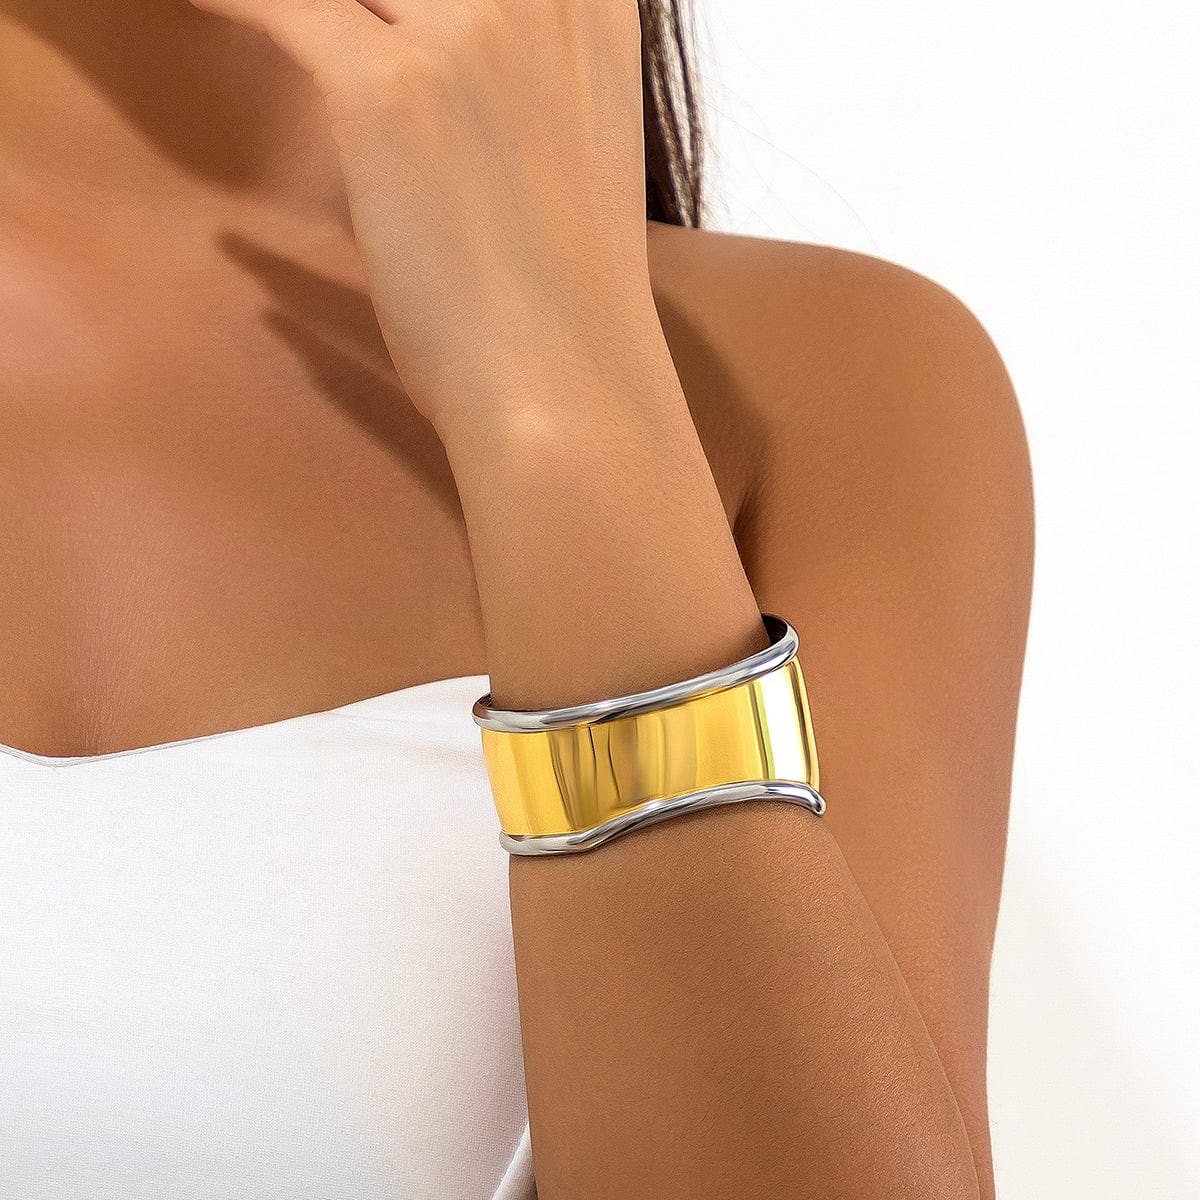 French Style Gold Silver Plated Glossy Open Cuff Bracelet - ArtGalleryZen